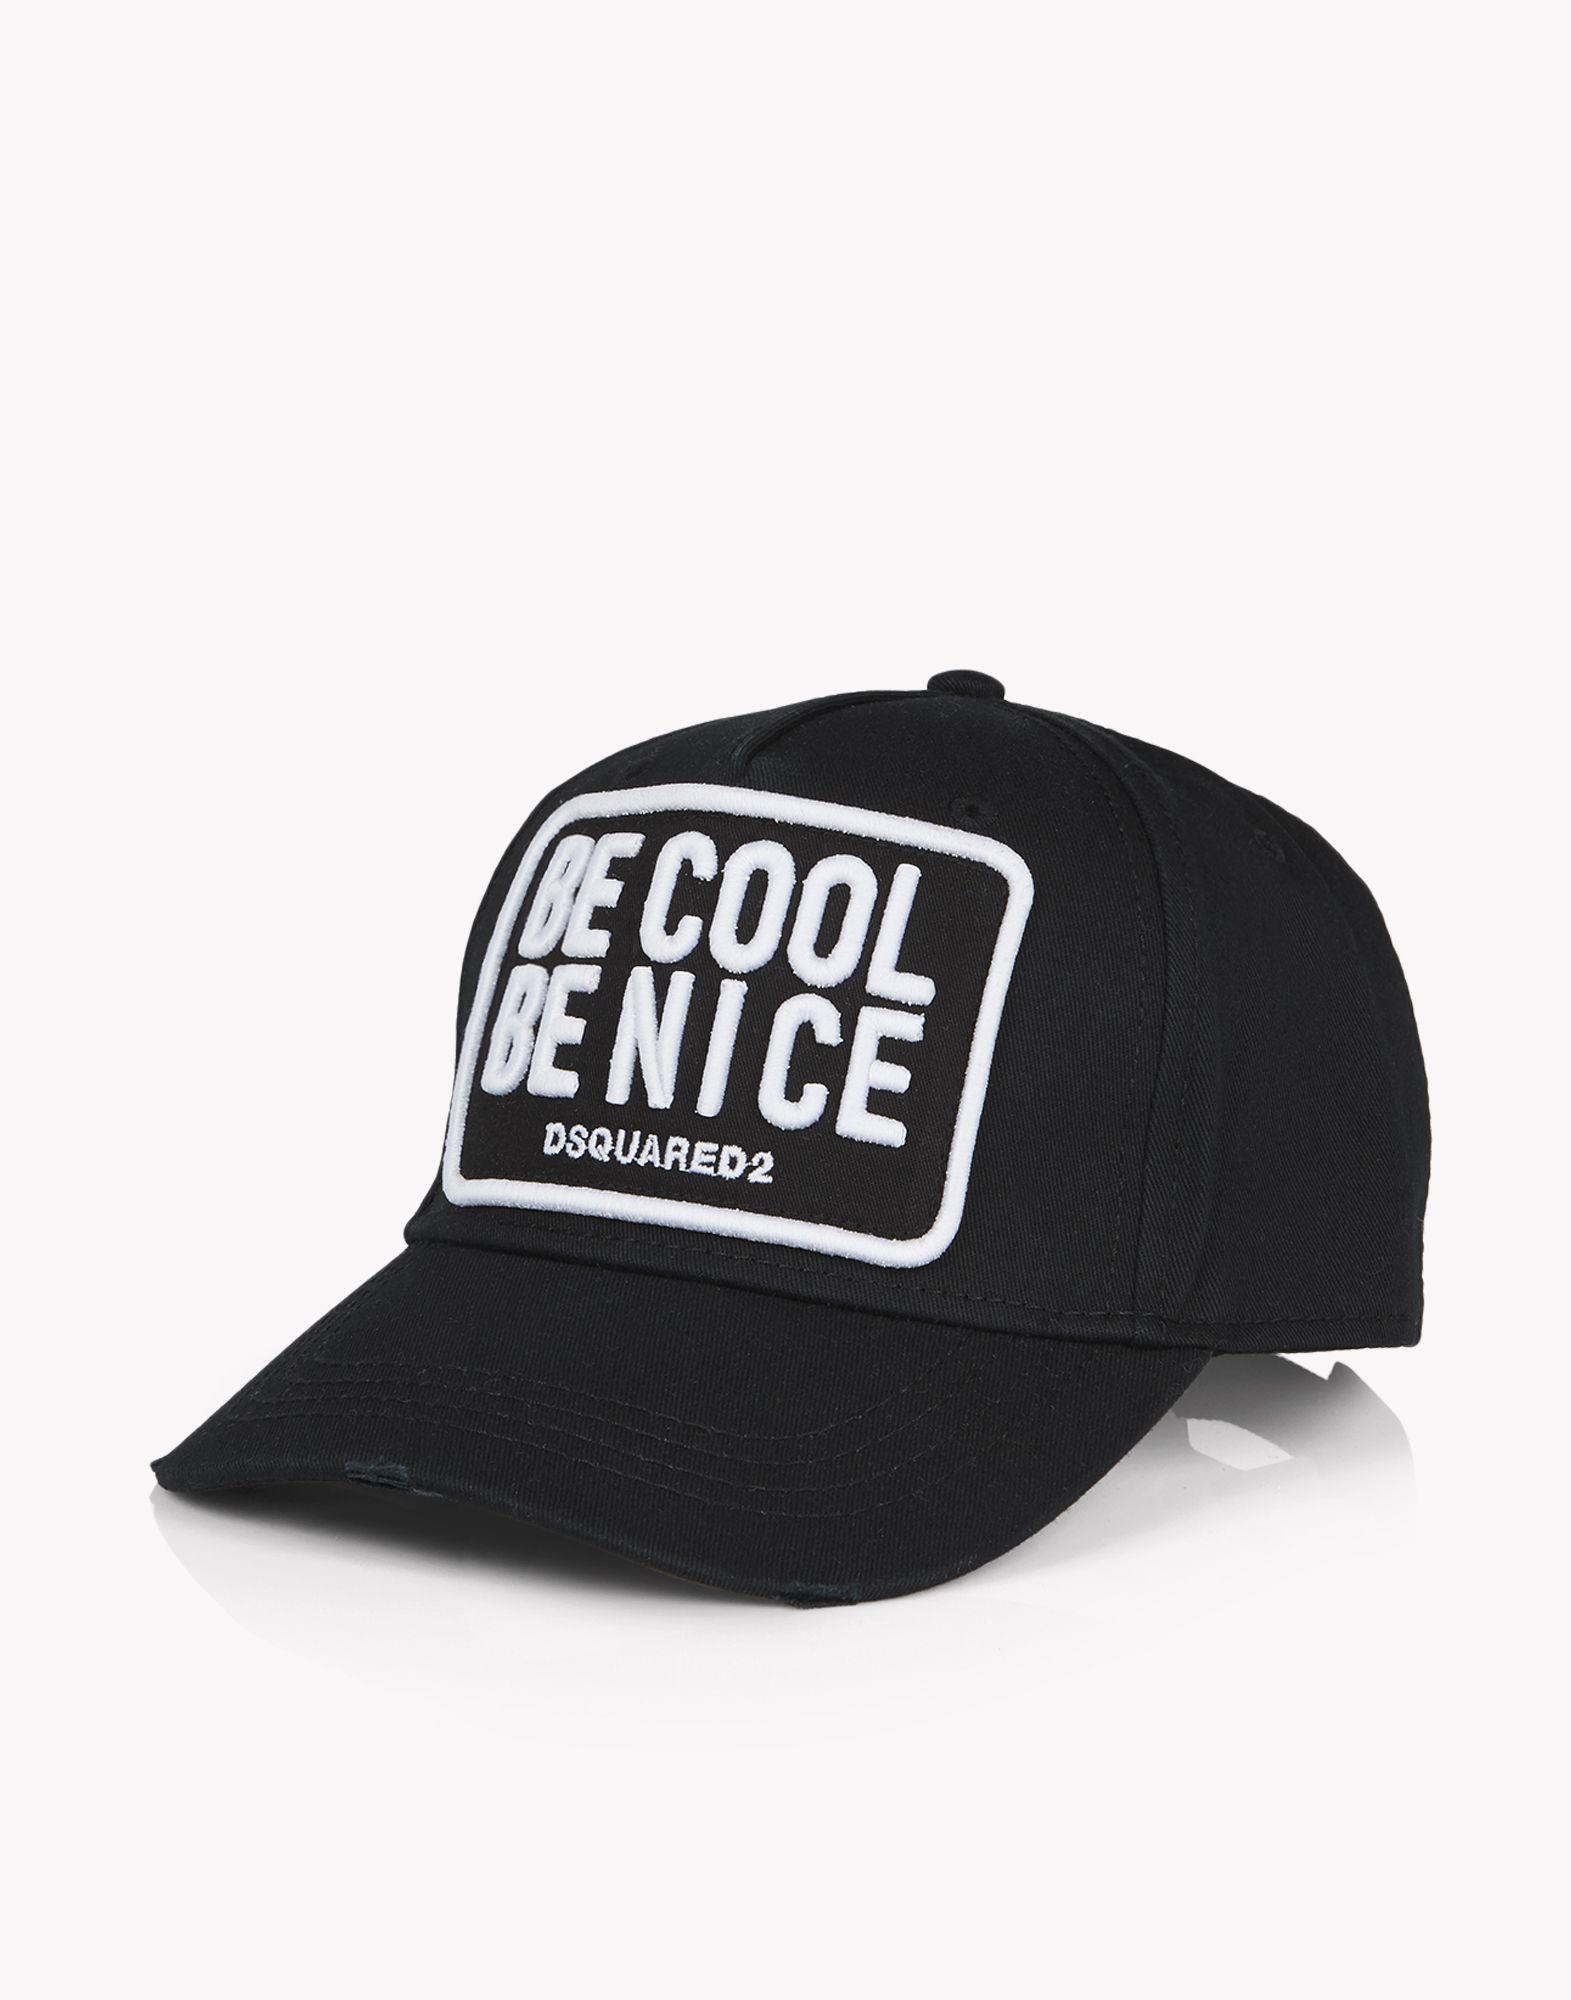 ثوم هناك باهت be cool be nice dsquared hat - dsvdedommel.com